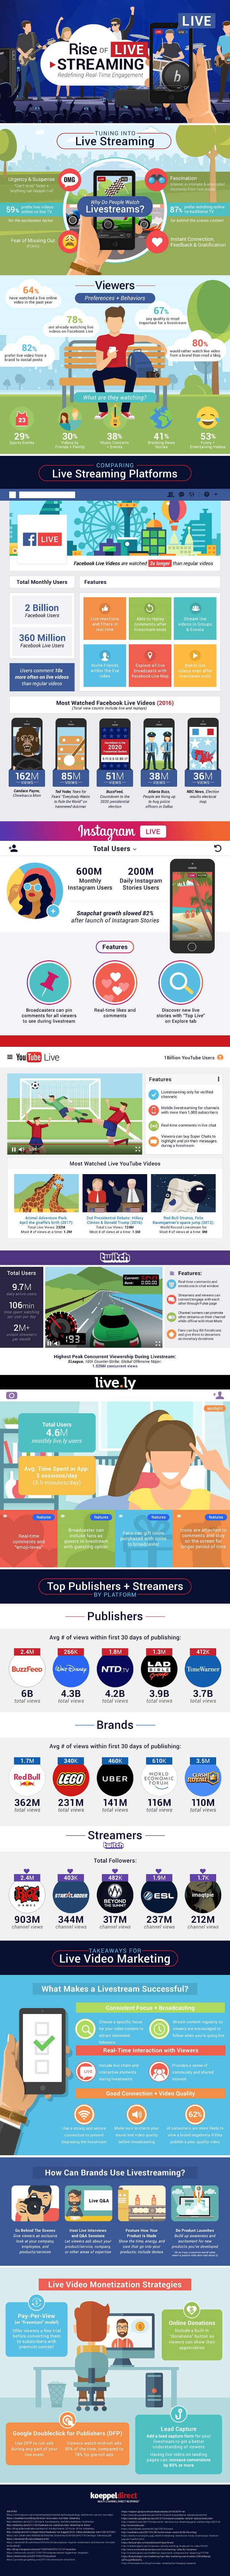 Statistics on the live streaming revolution.